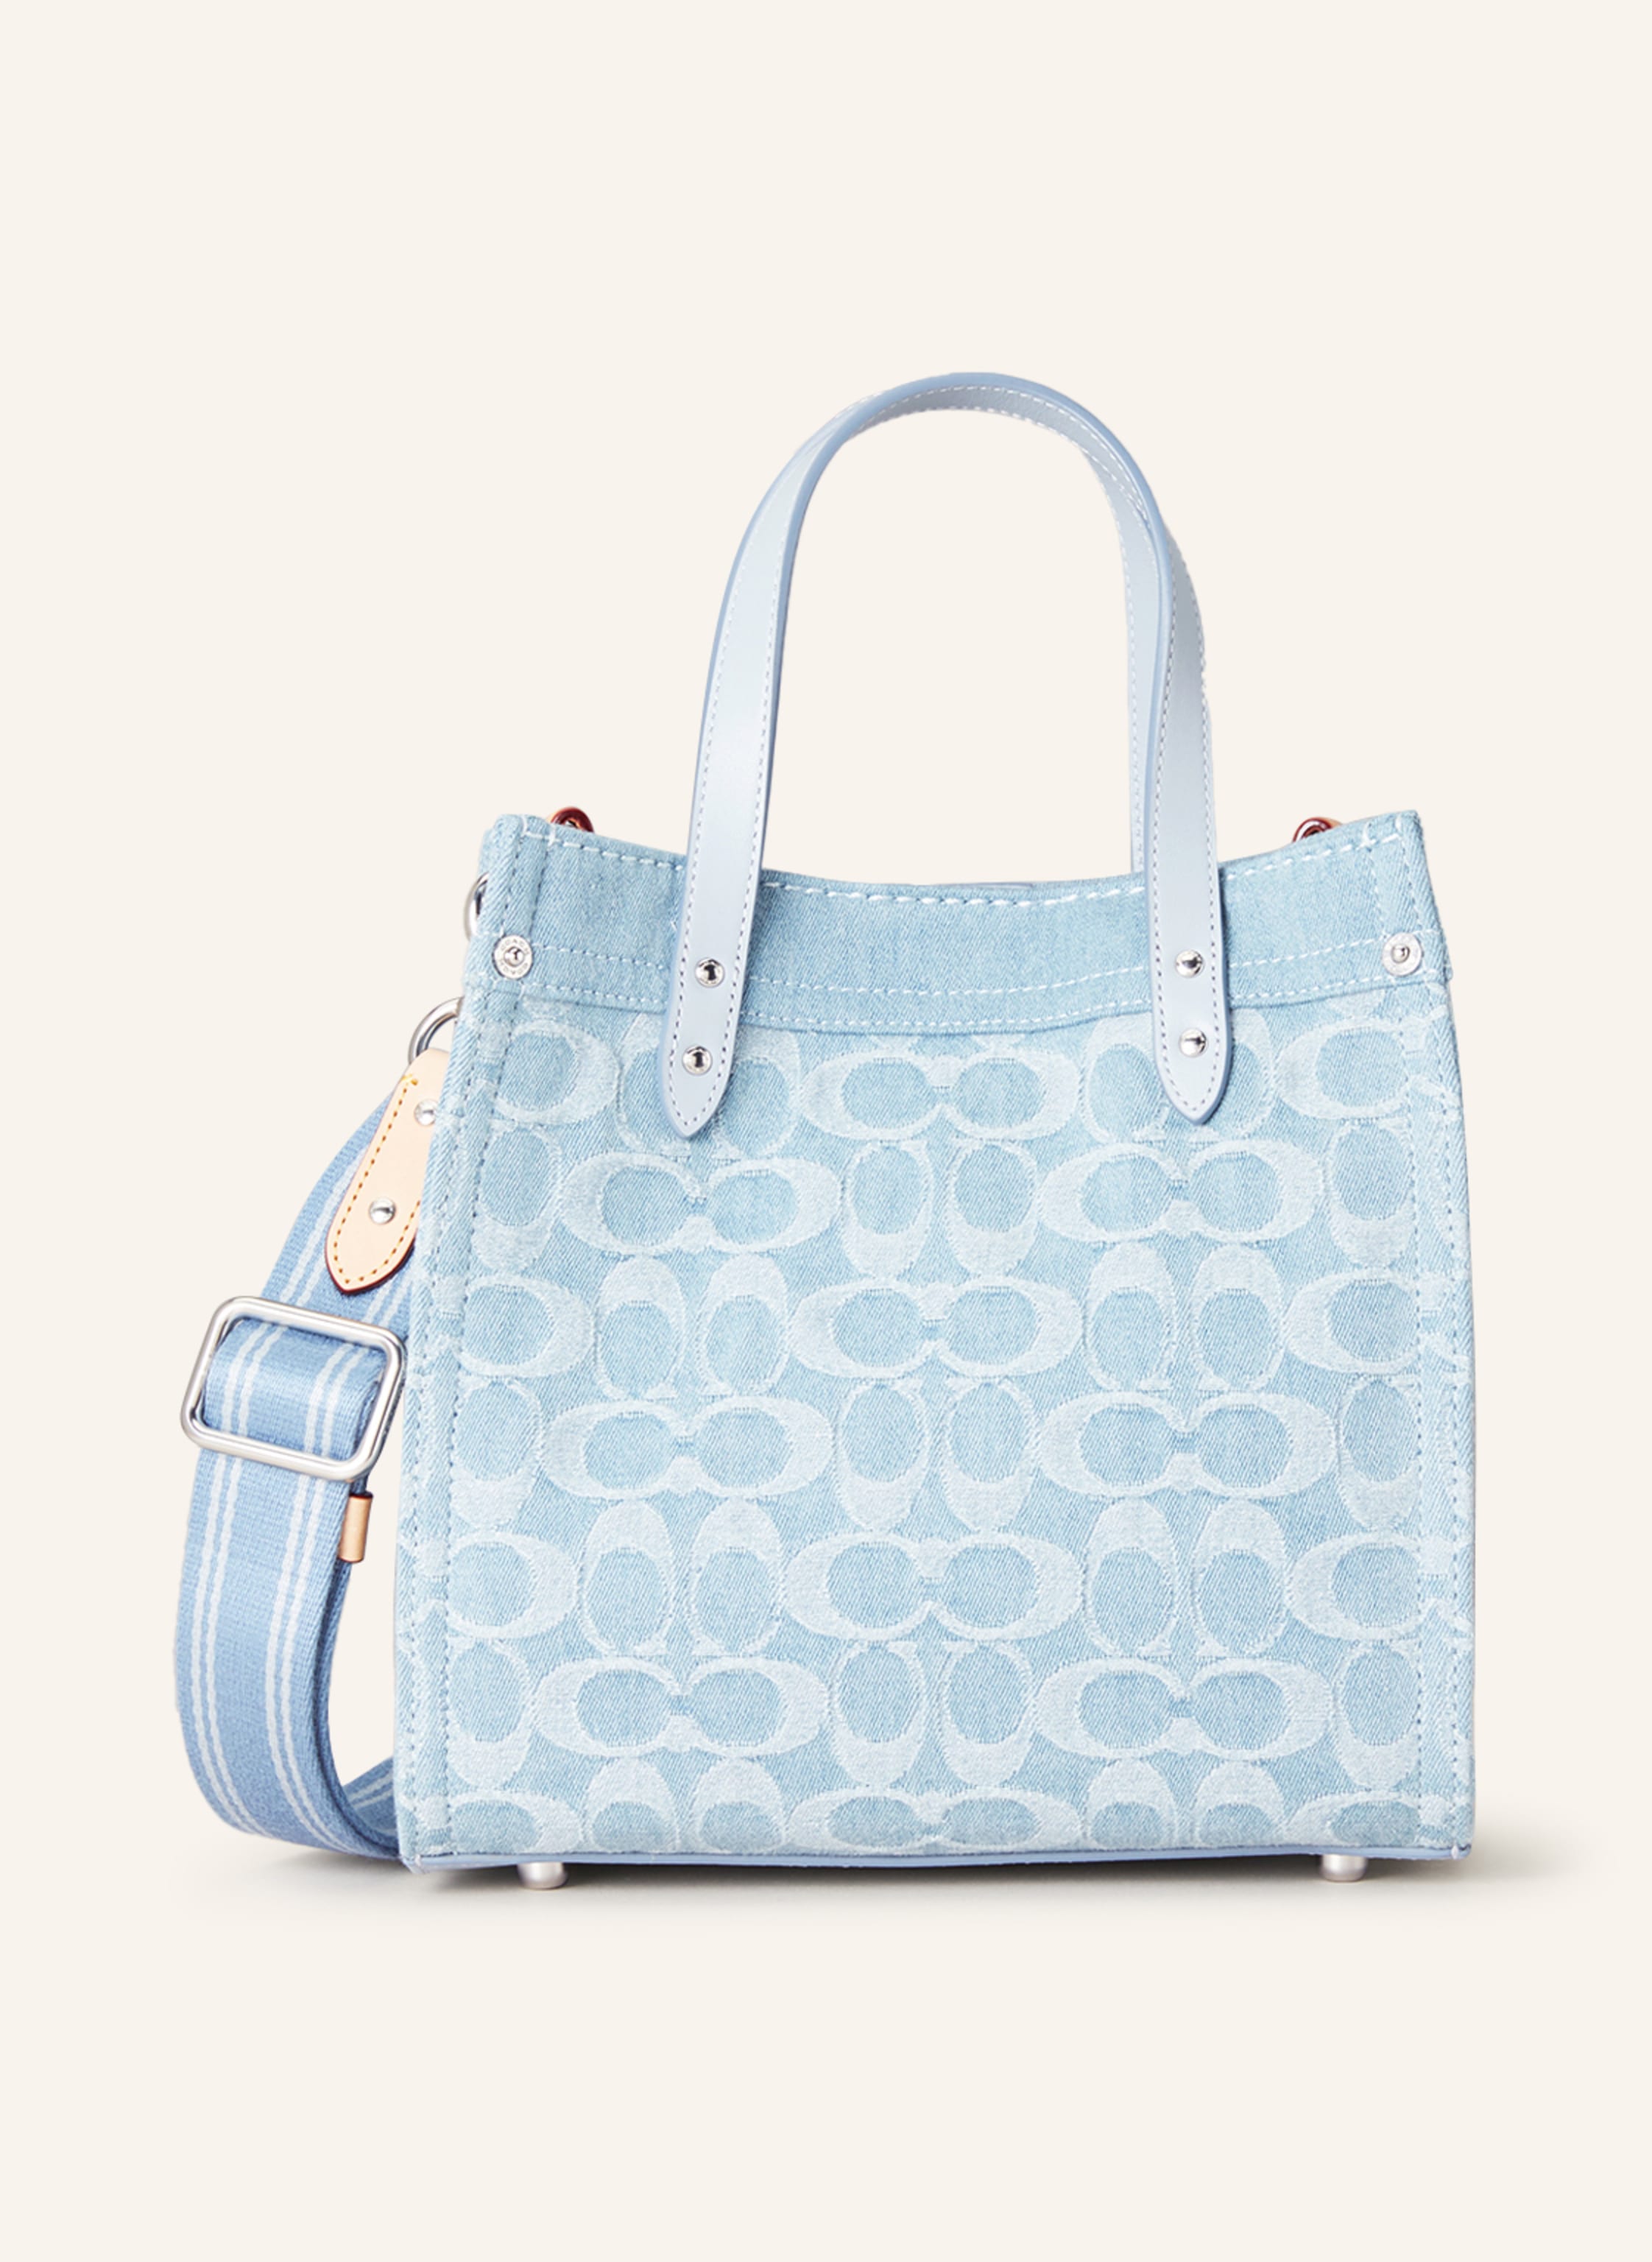 Coach Blue Leather Handbag | Blue leather handbag, Beige handbags, Leather  handbags